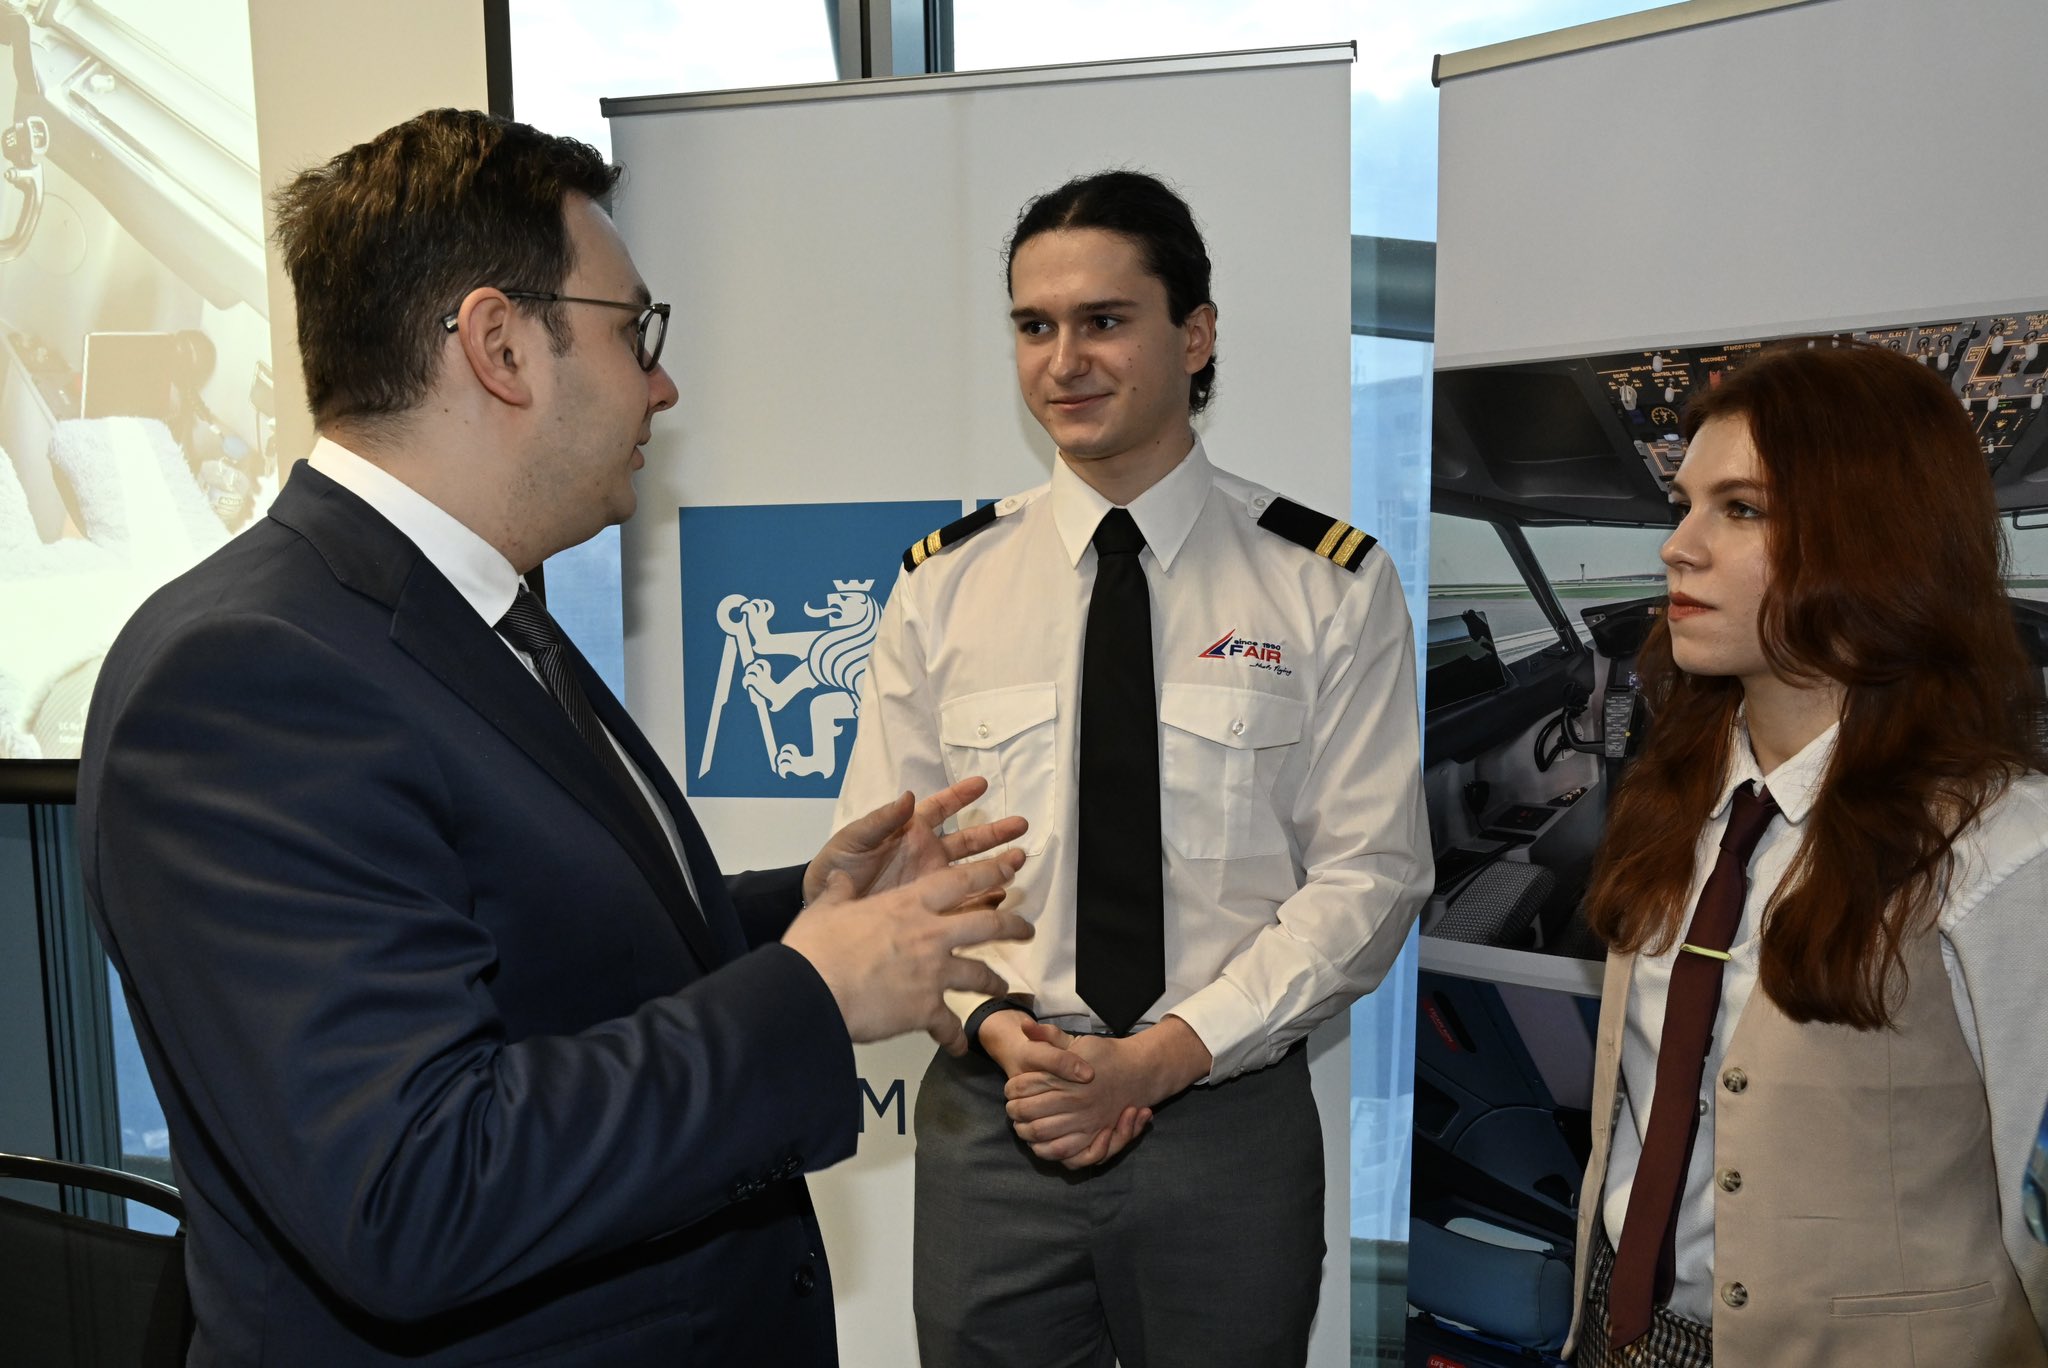 Czechia will train 20 Ukrainian civil aviation pilots